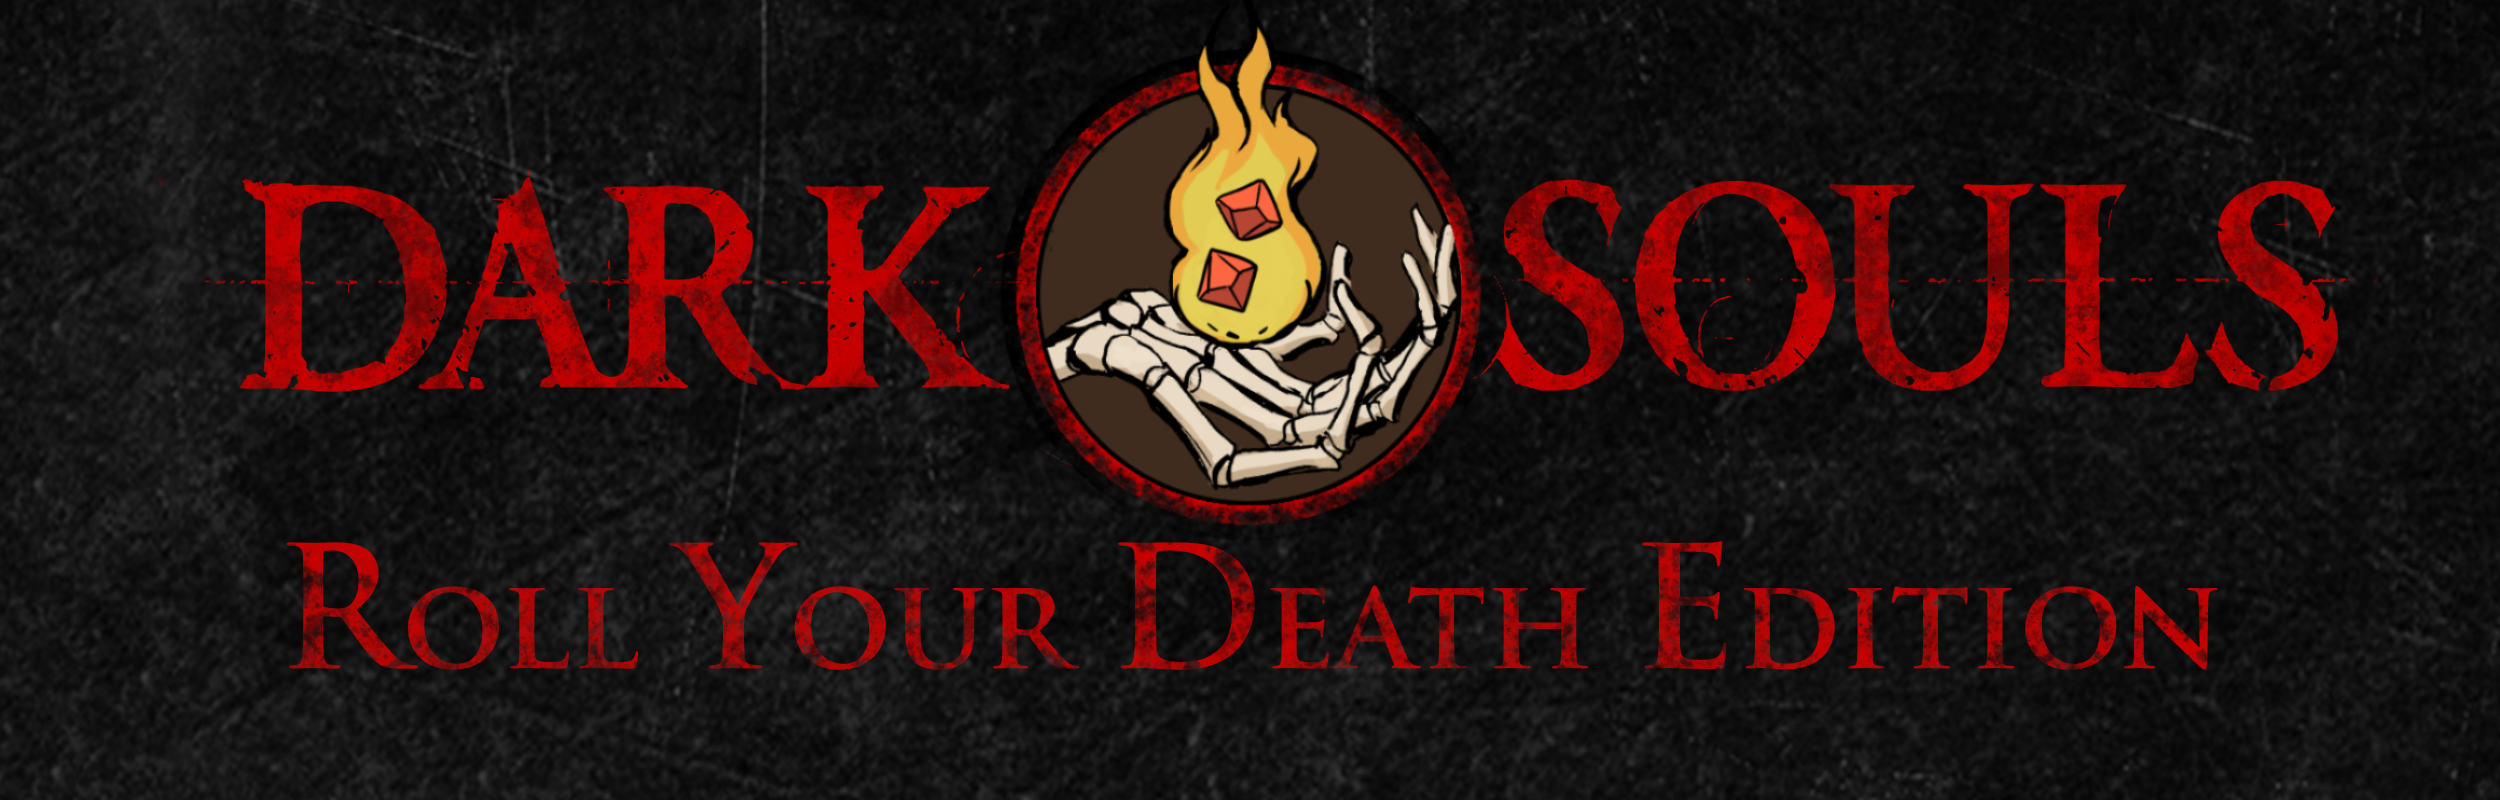 Dark Souls Roll Your Death Edition